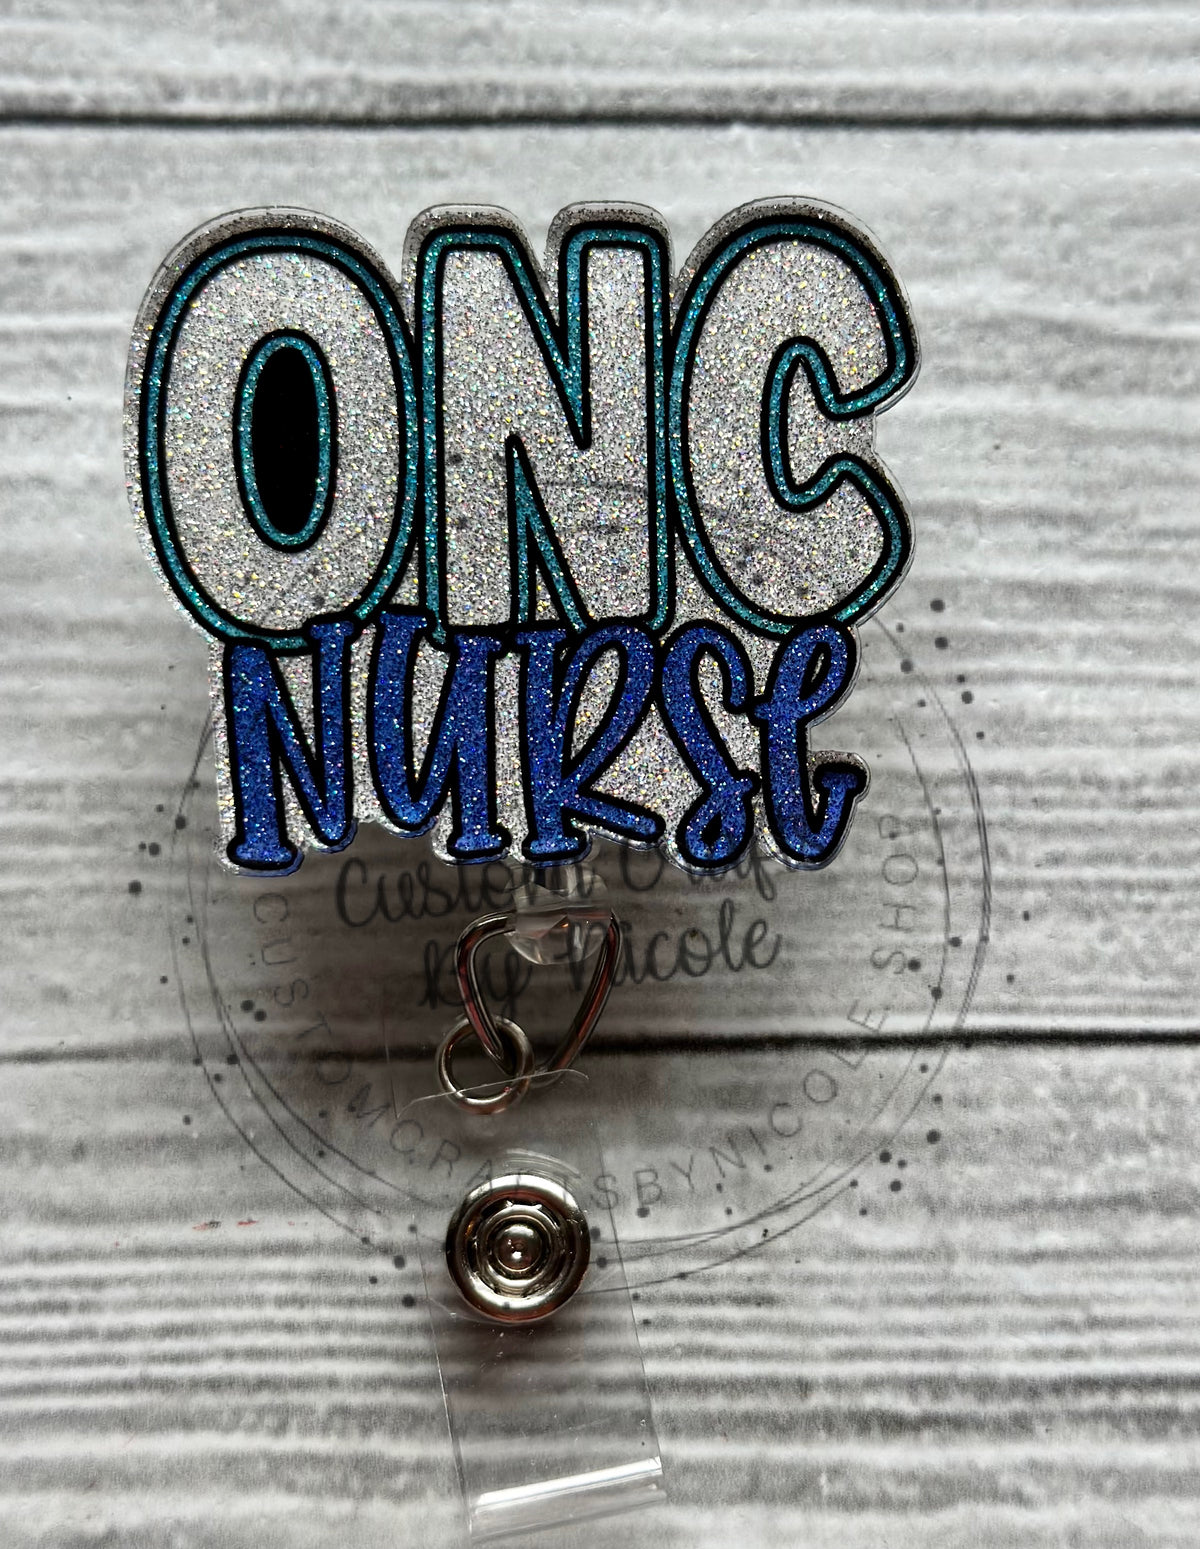 Onc nurse